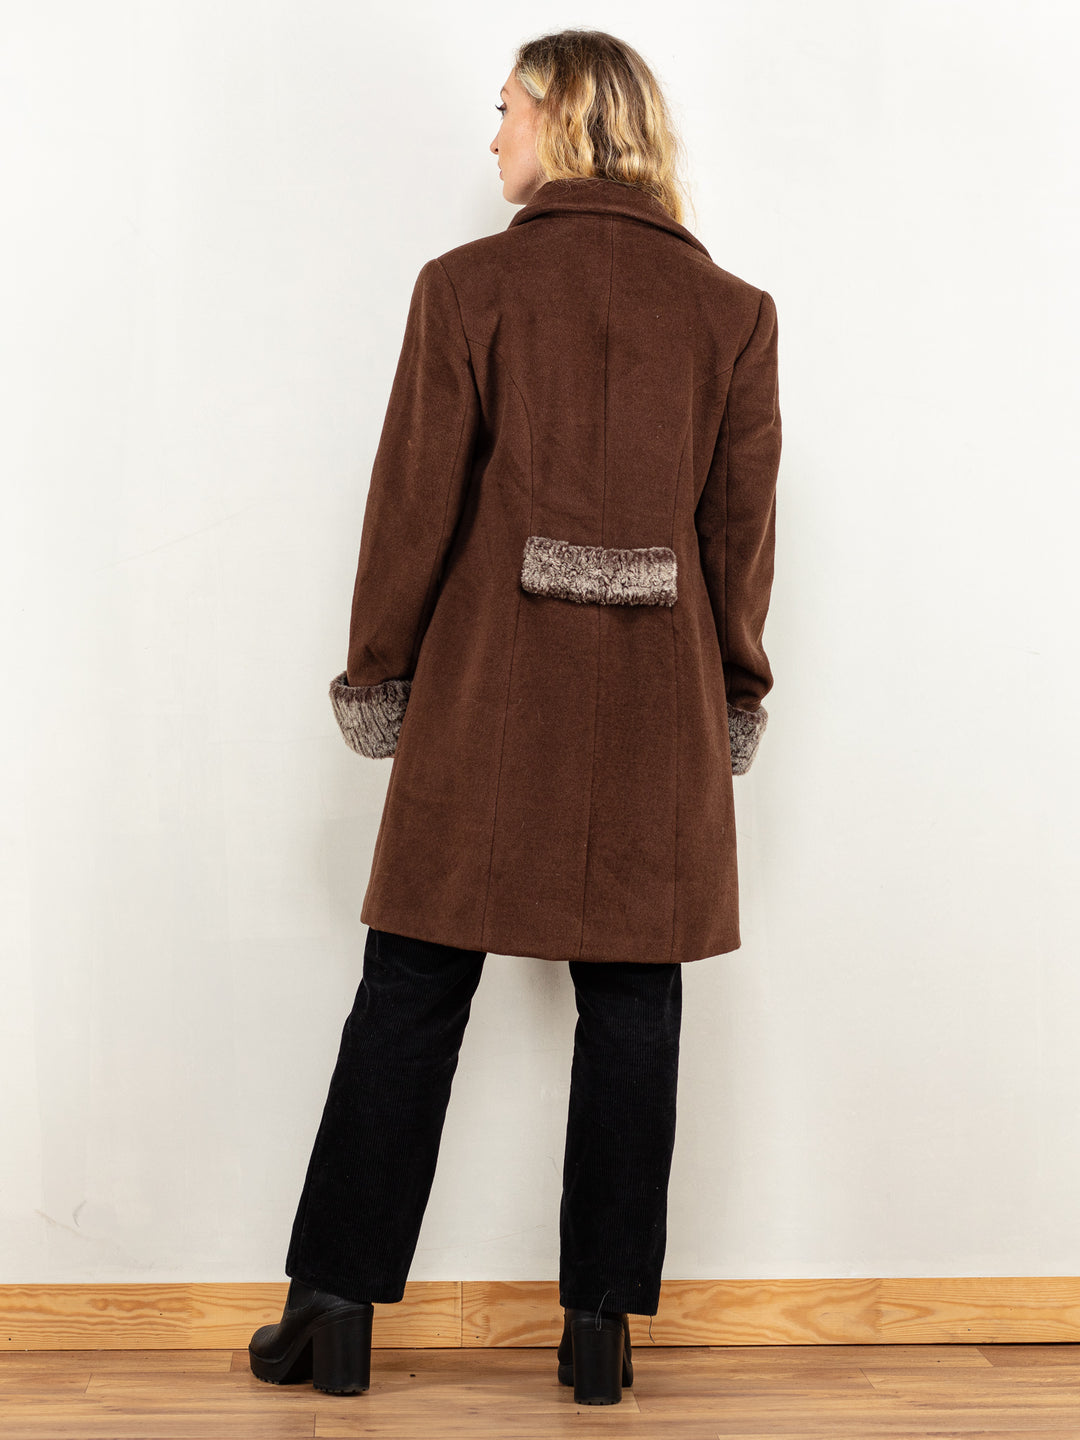 Brown Wool Coat women 80s pure new wool penny lane style coat brown winter minimalist overcoat casual elegant women outerwear size small